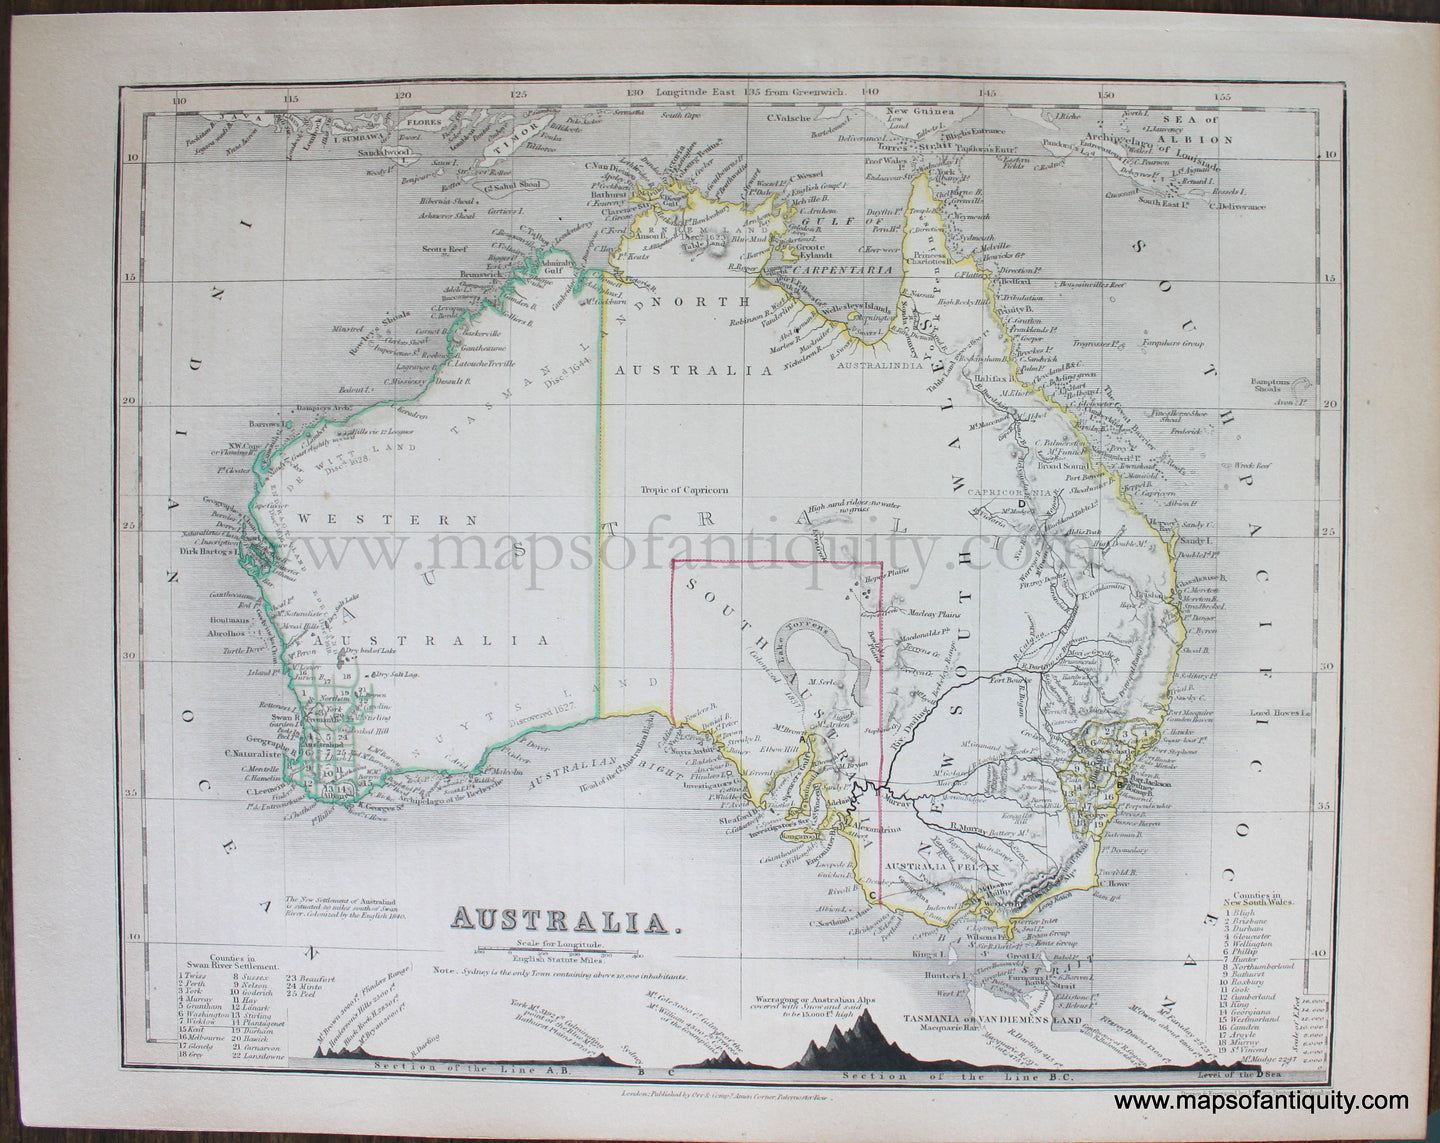 Genuine-Antique-Map-Australia-Australia-&-Pacific--1850-Petermann-/-Orr-/-Dower-Maps-Of-Antiquity-1800s-19th-century